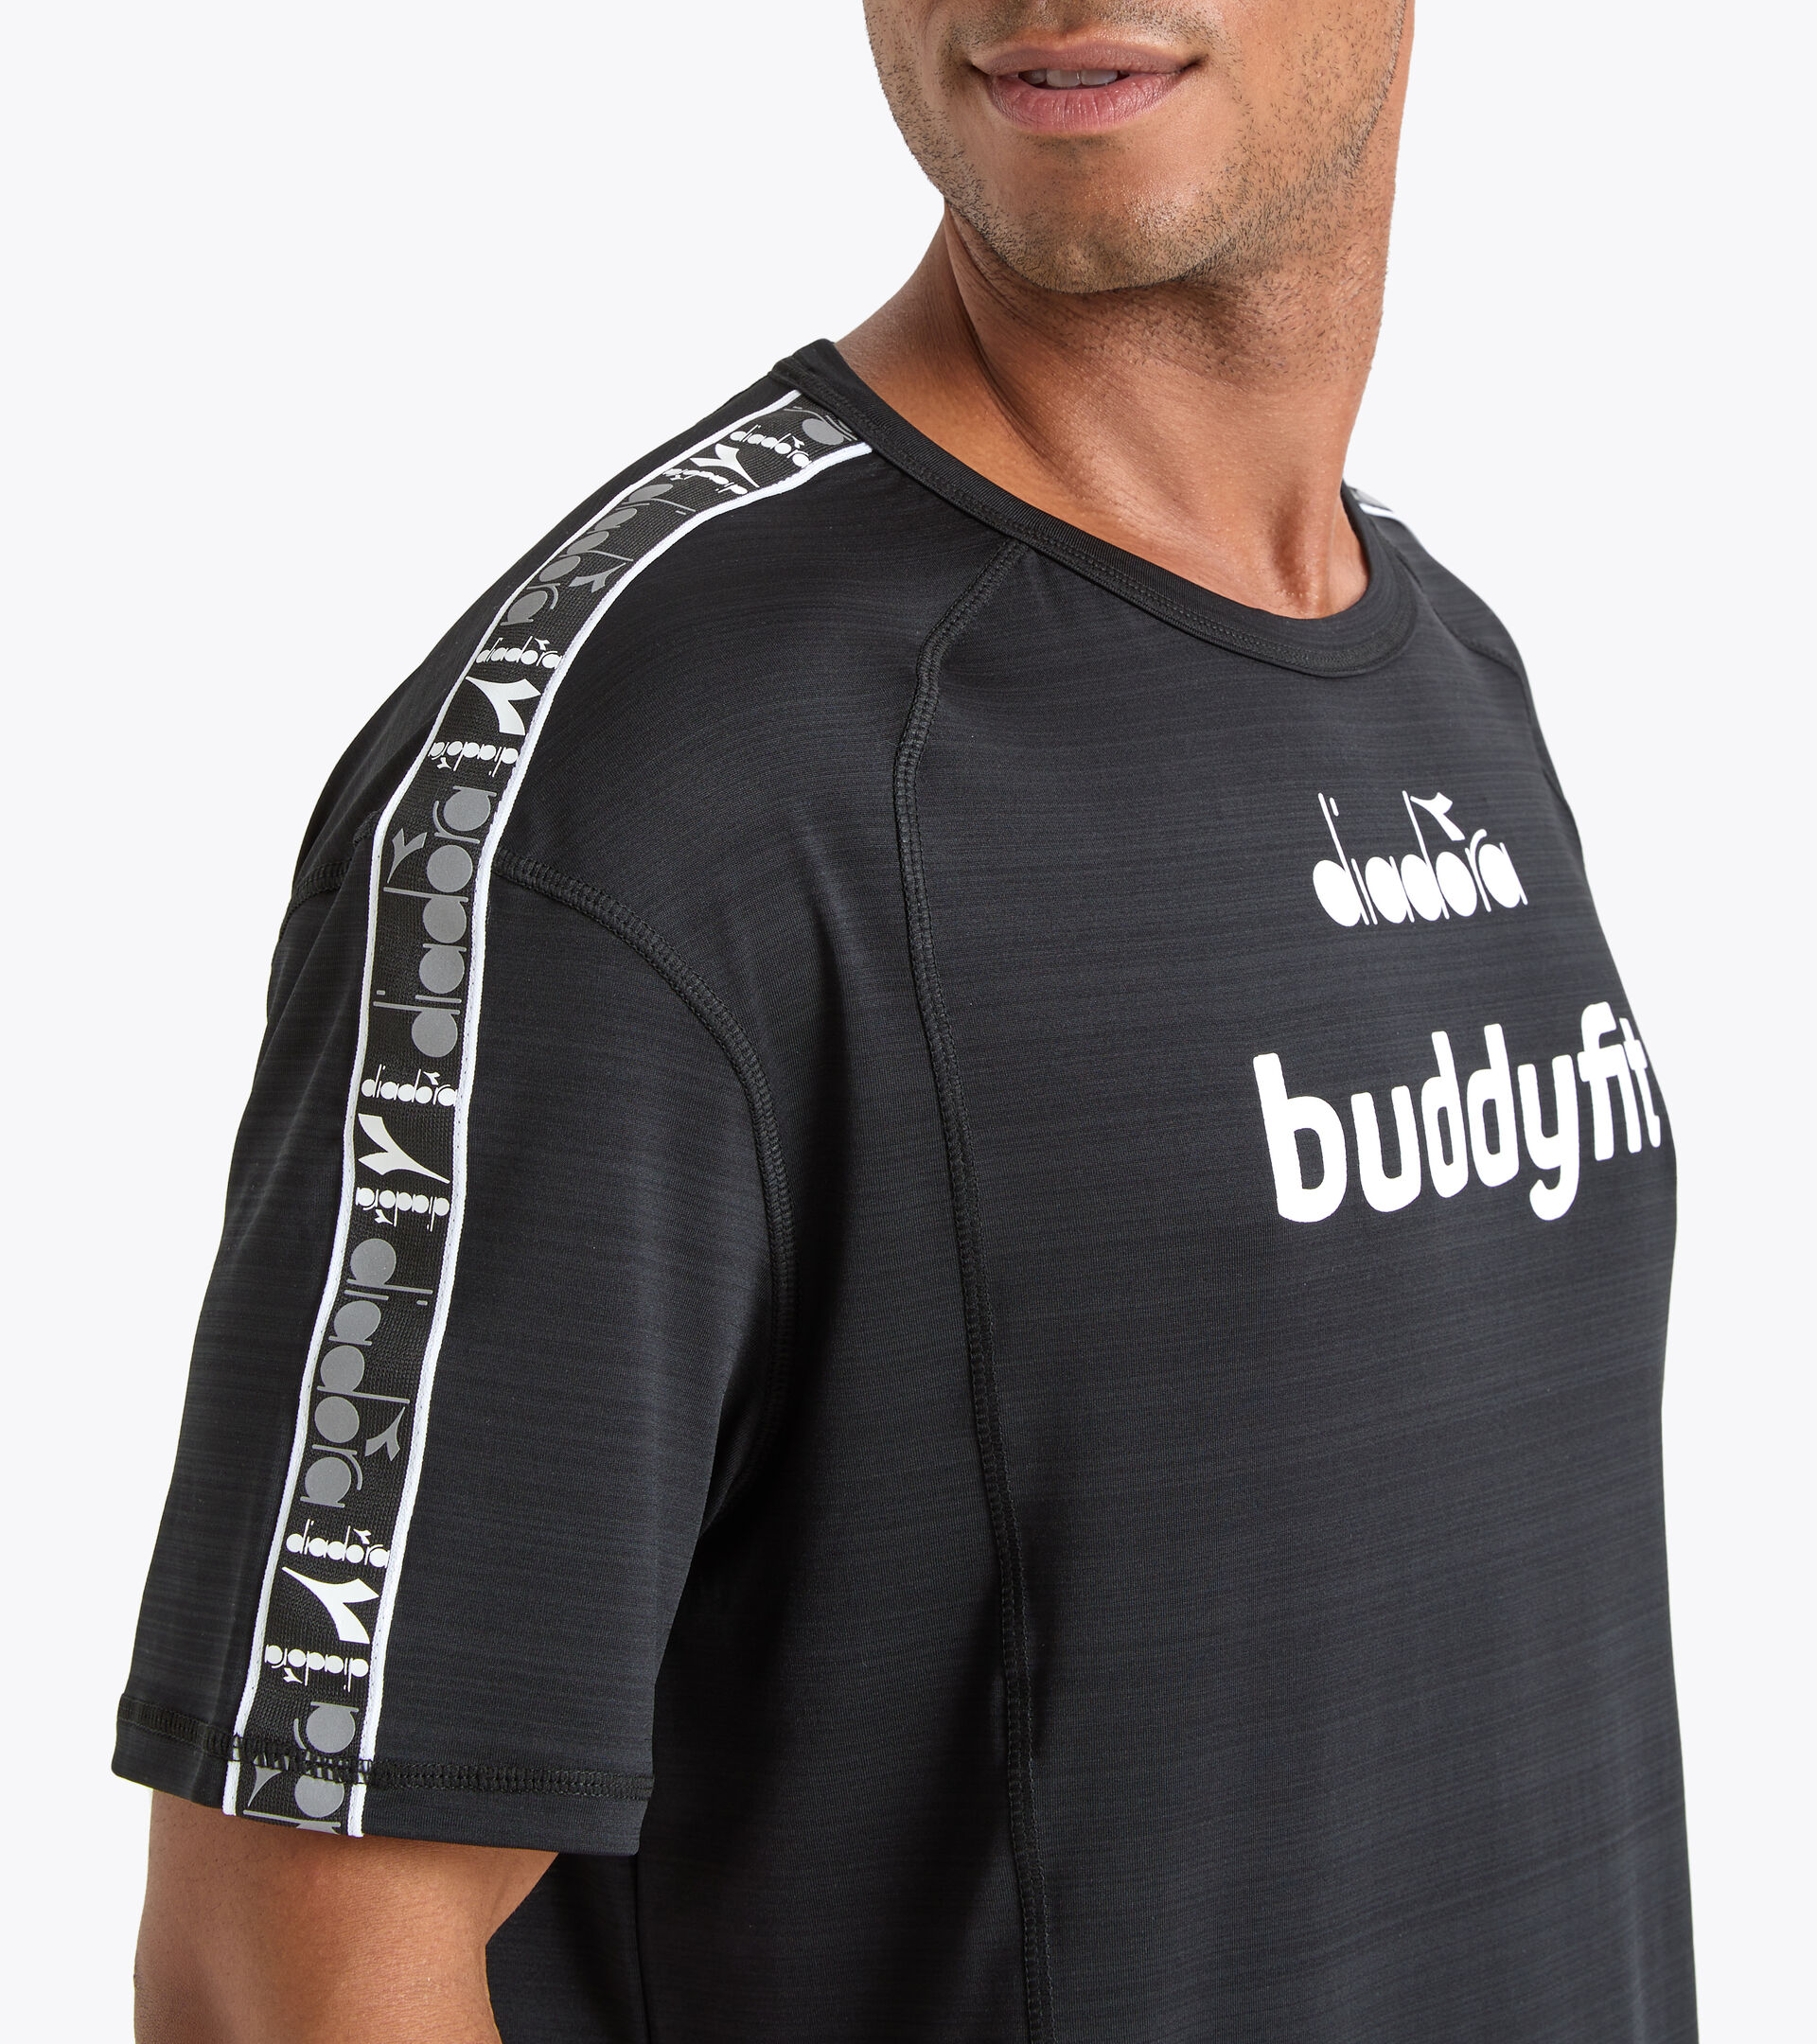 Mes nudo reflejar SS T-SHIRT BUDDYFIT Training T-shirt - Men's - Diadora Online Store US